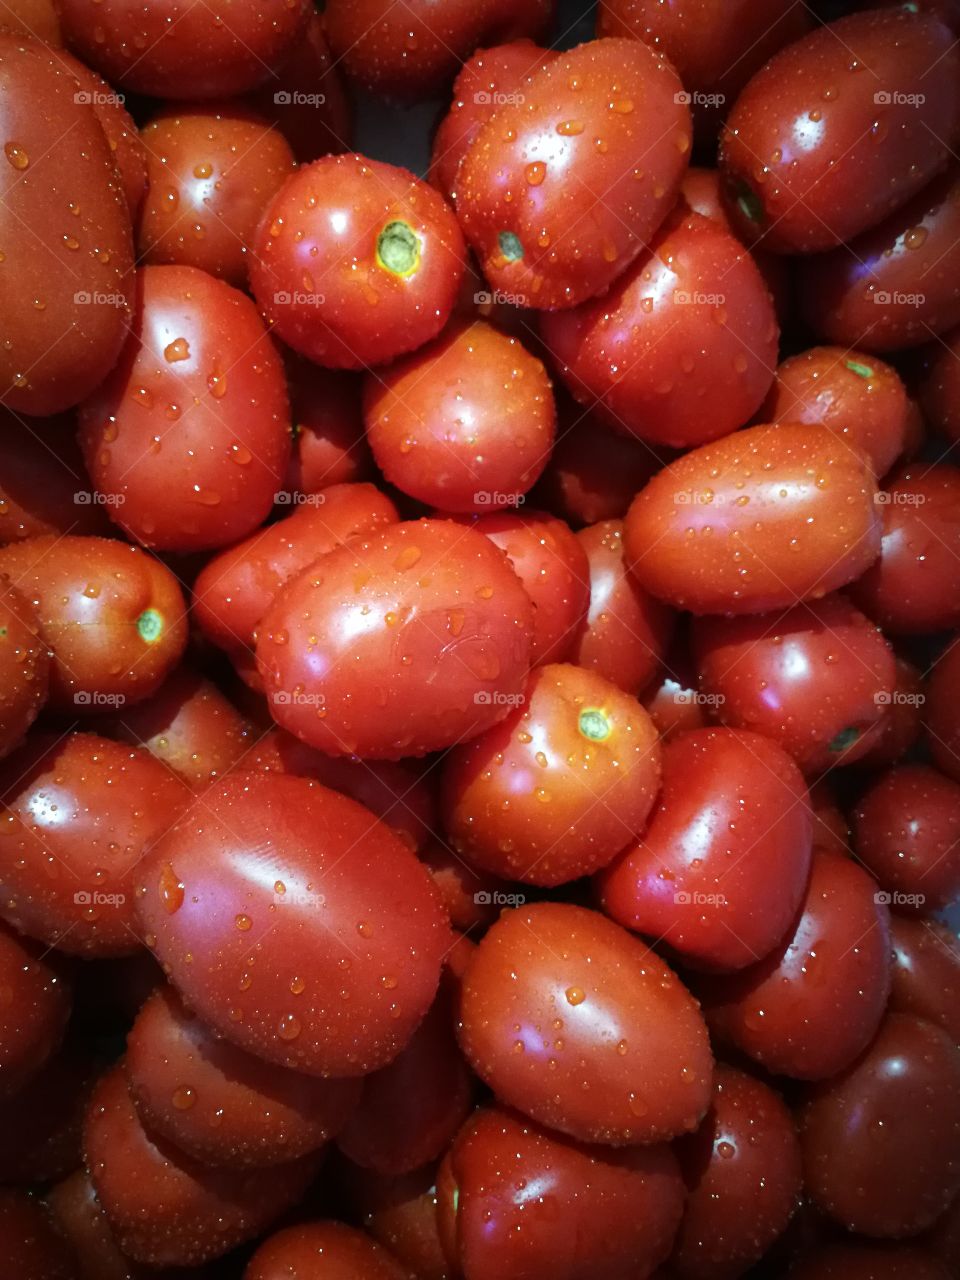 Tomatoes sauce season